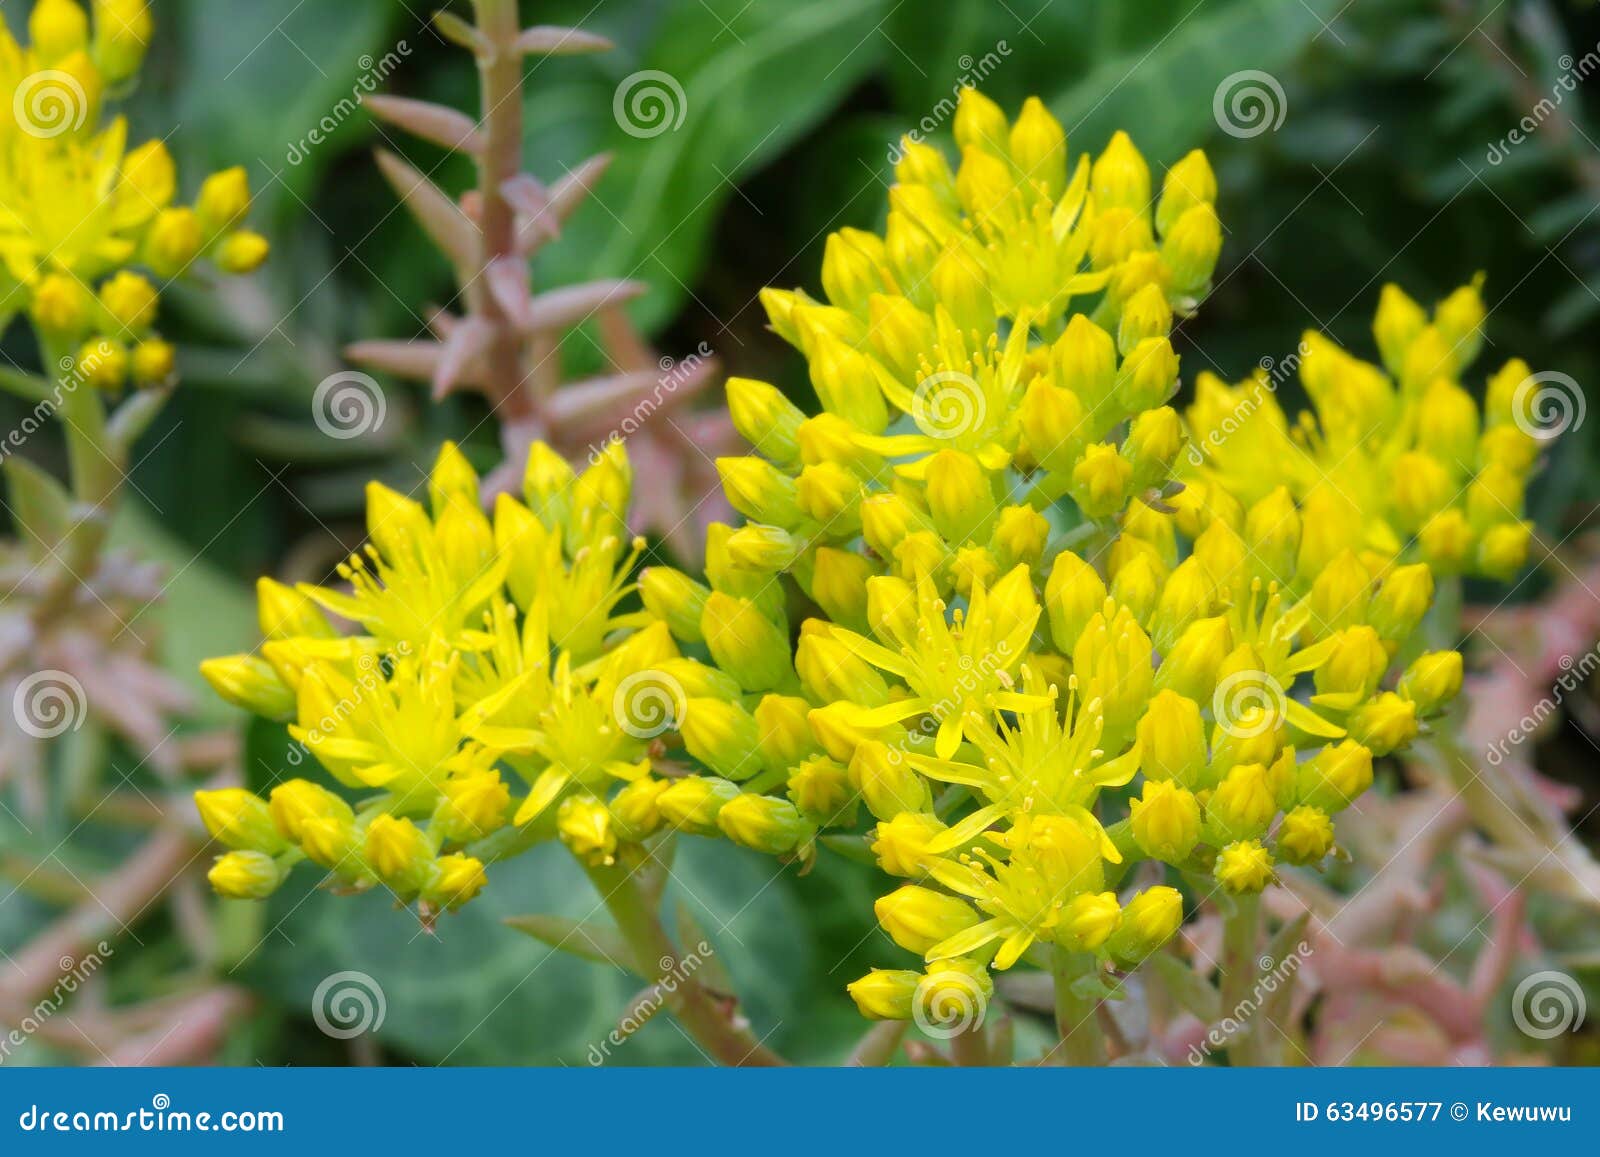 Star Shaped Yellow Flowers of Sedum, Stonecrop Stock Image - Image of ...